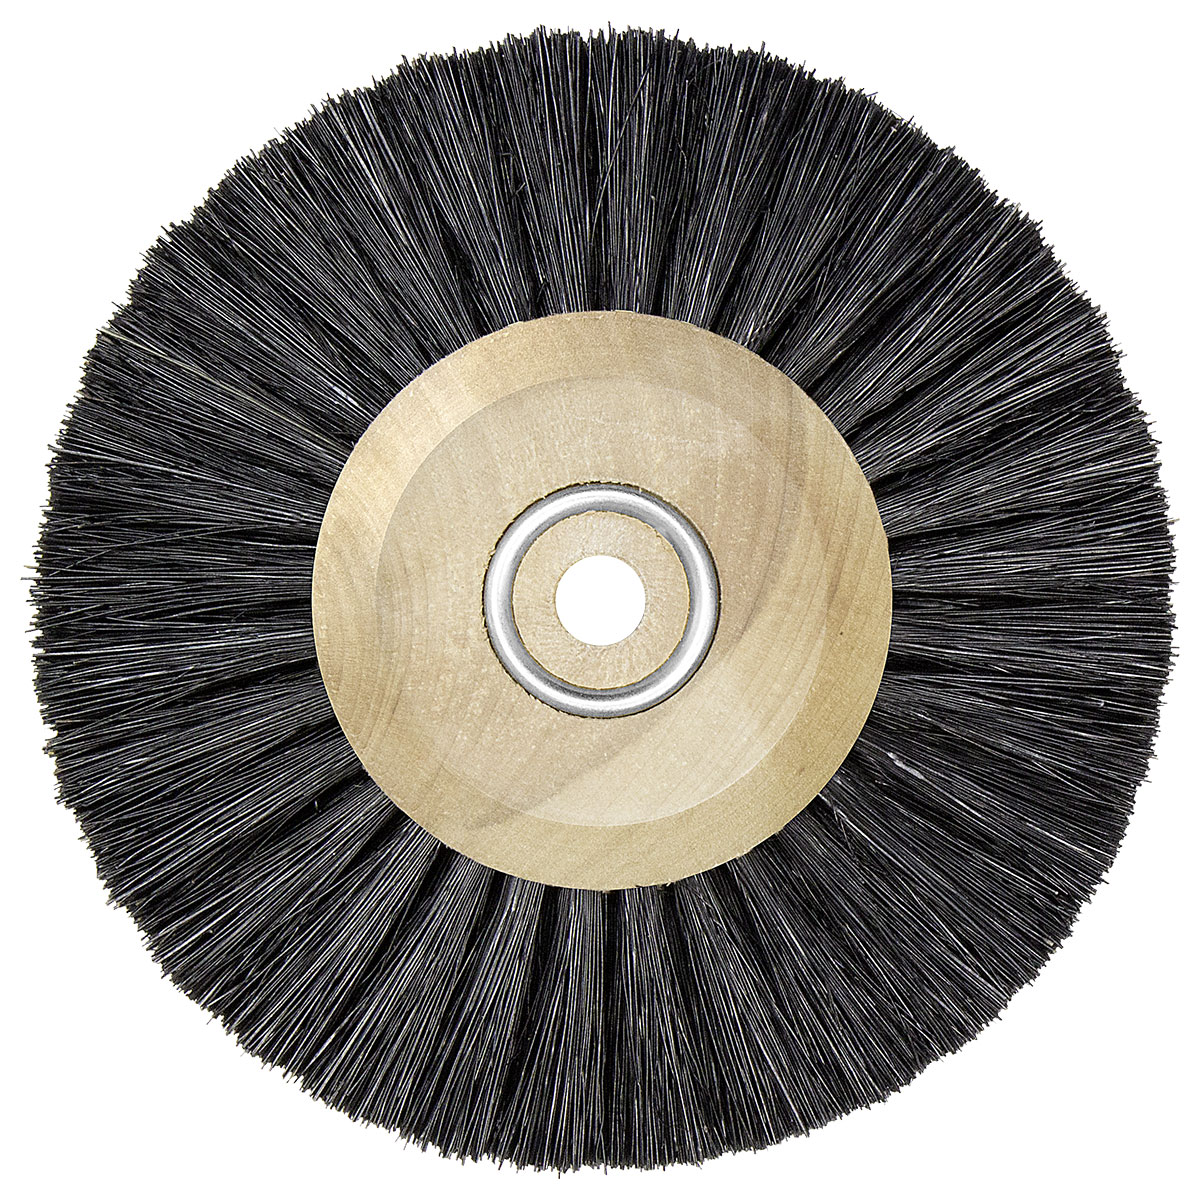 Wheel brush bristle 3 rows 80 mm